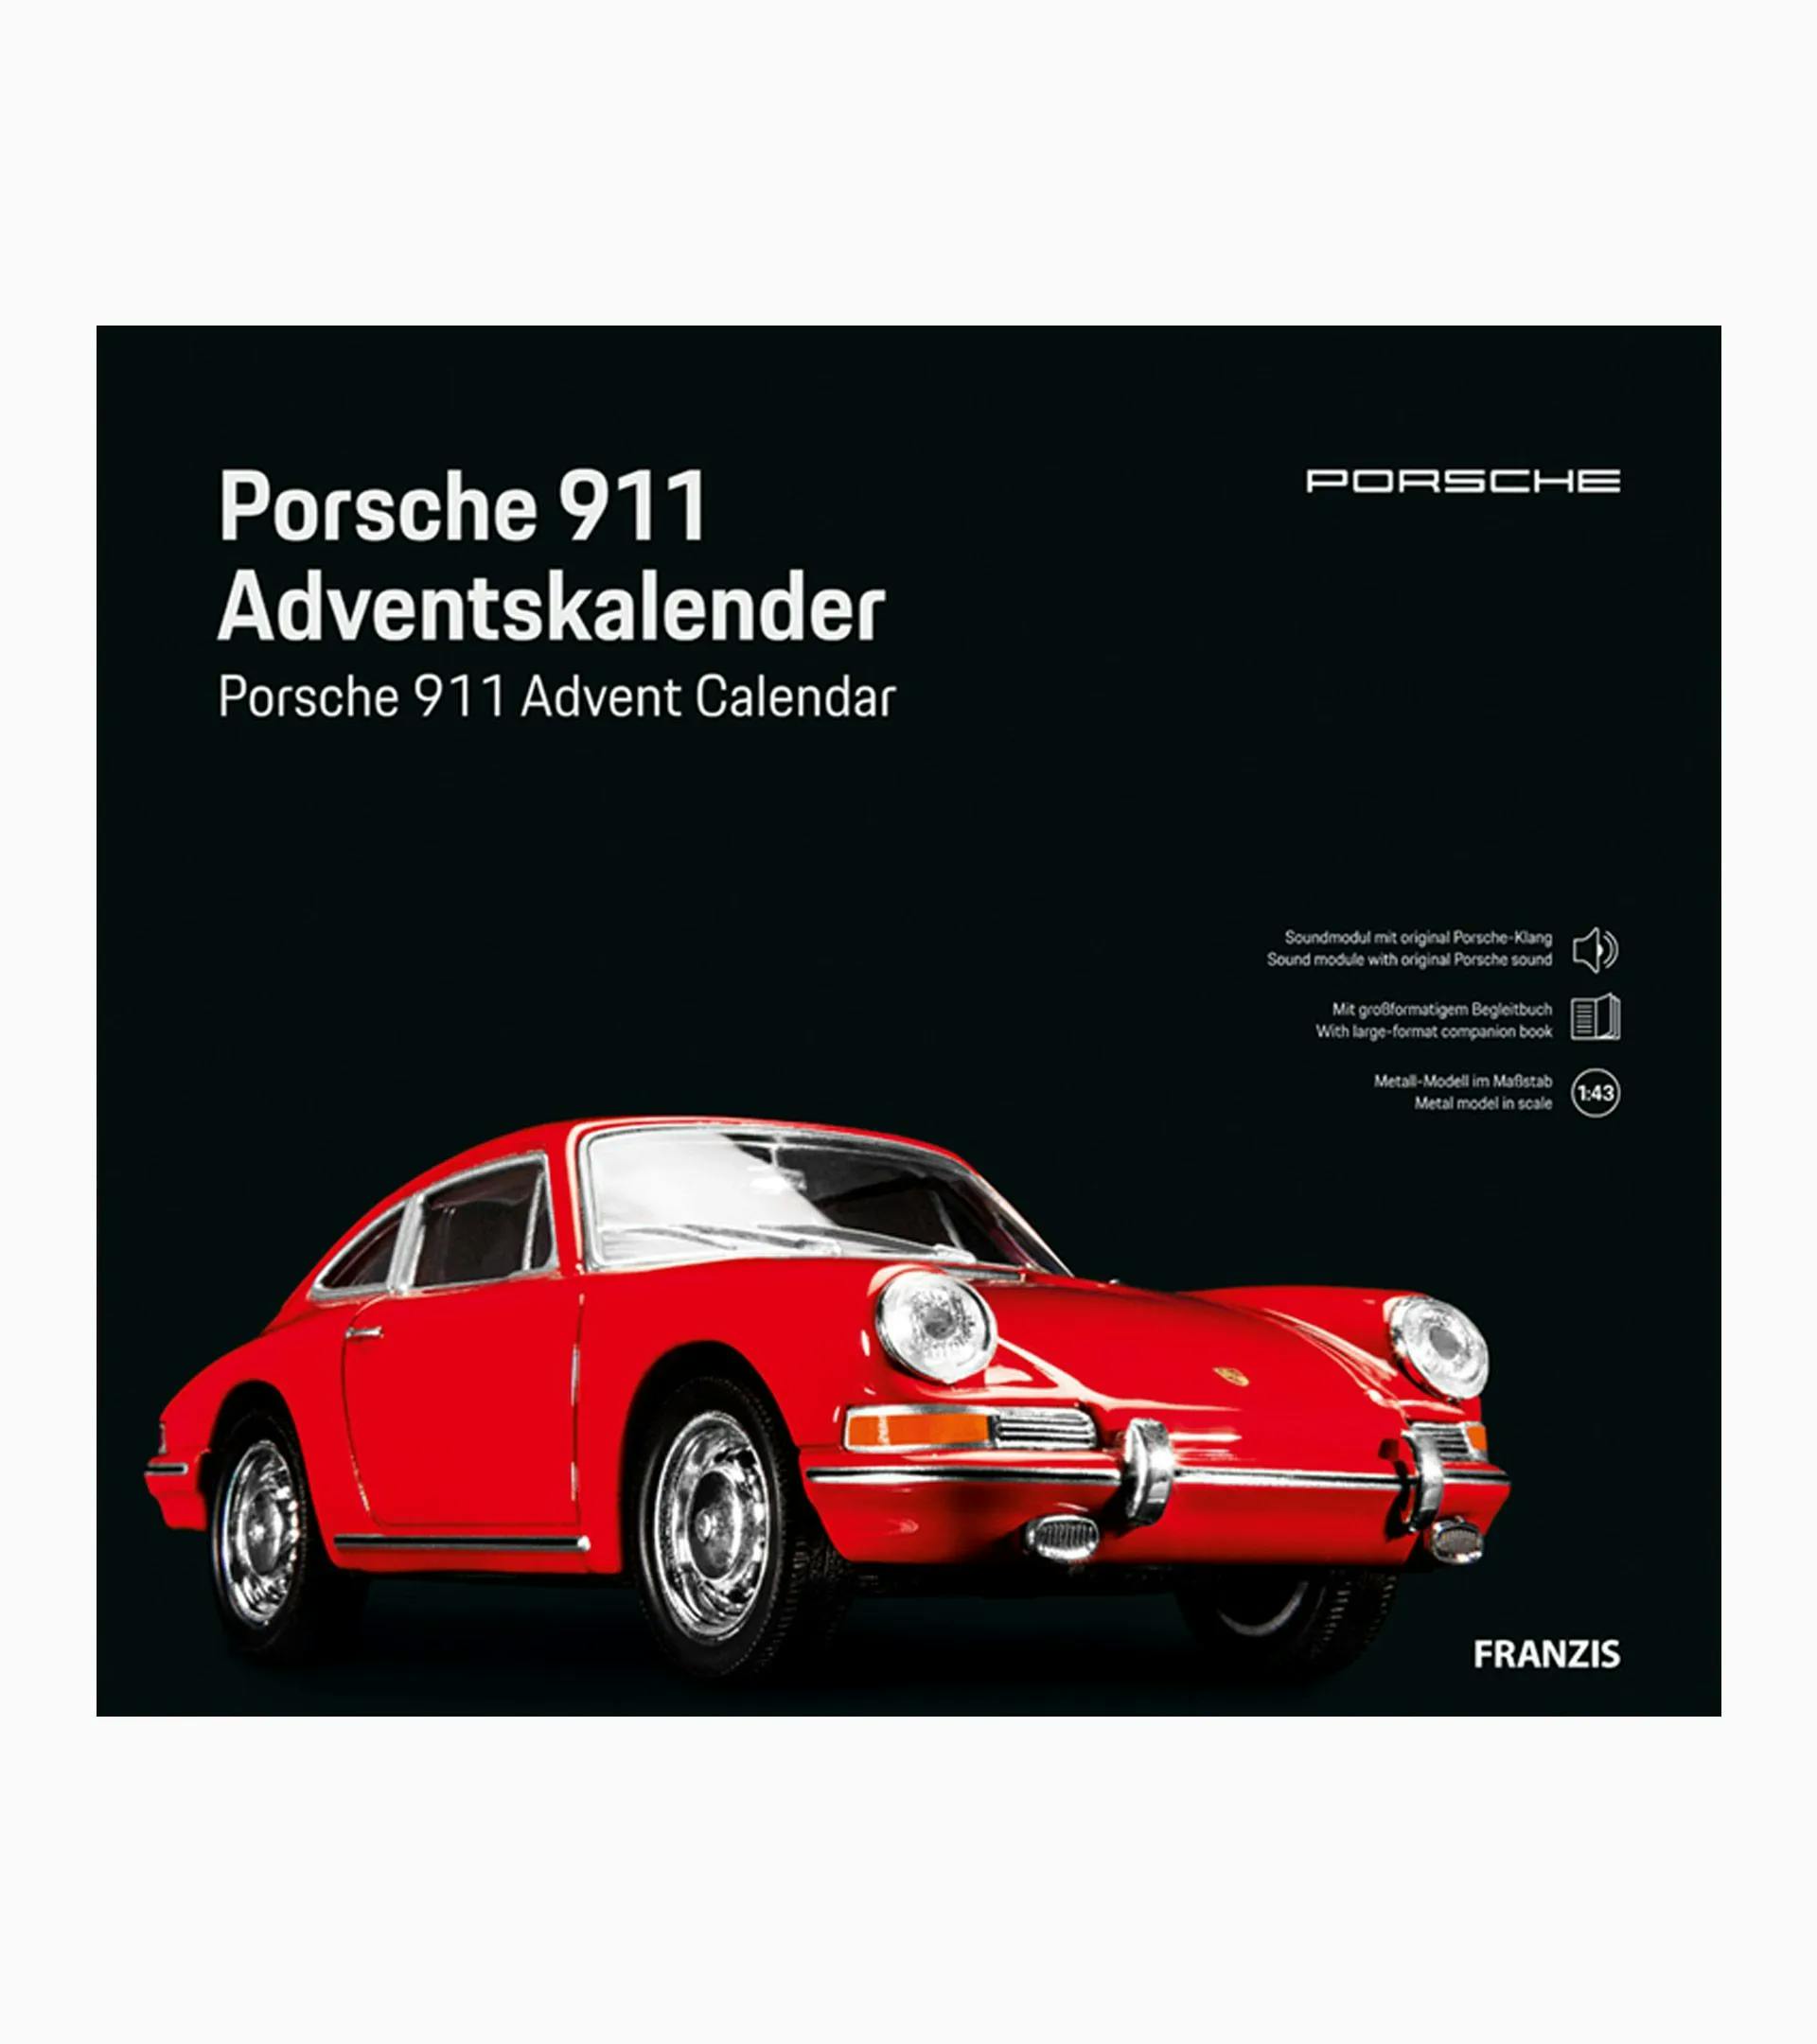 Porsche 911 advent calendar 2